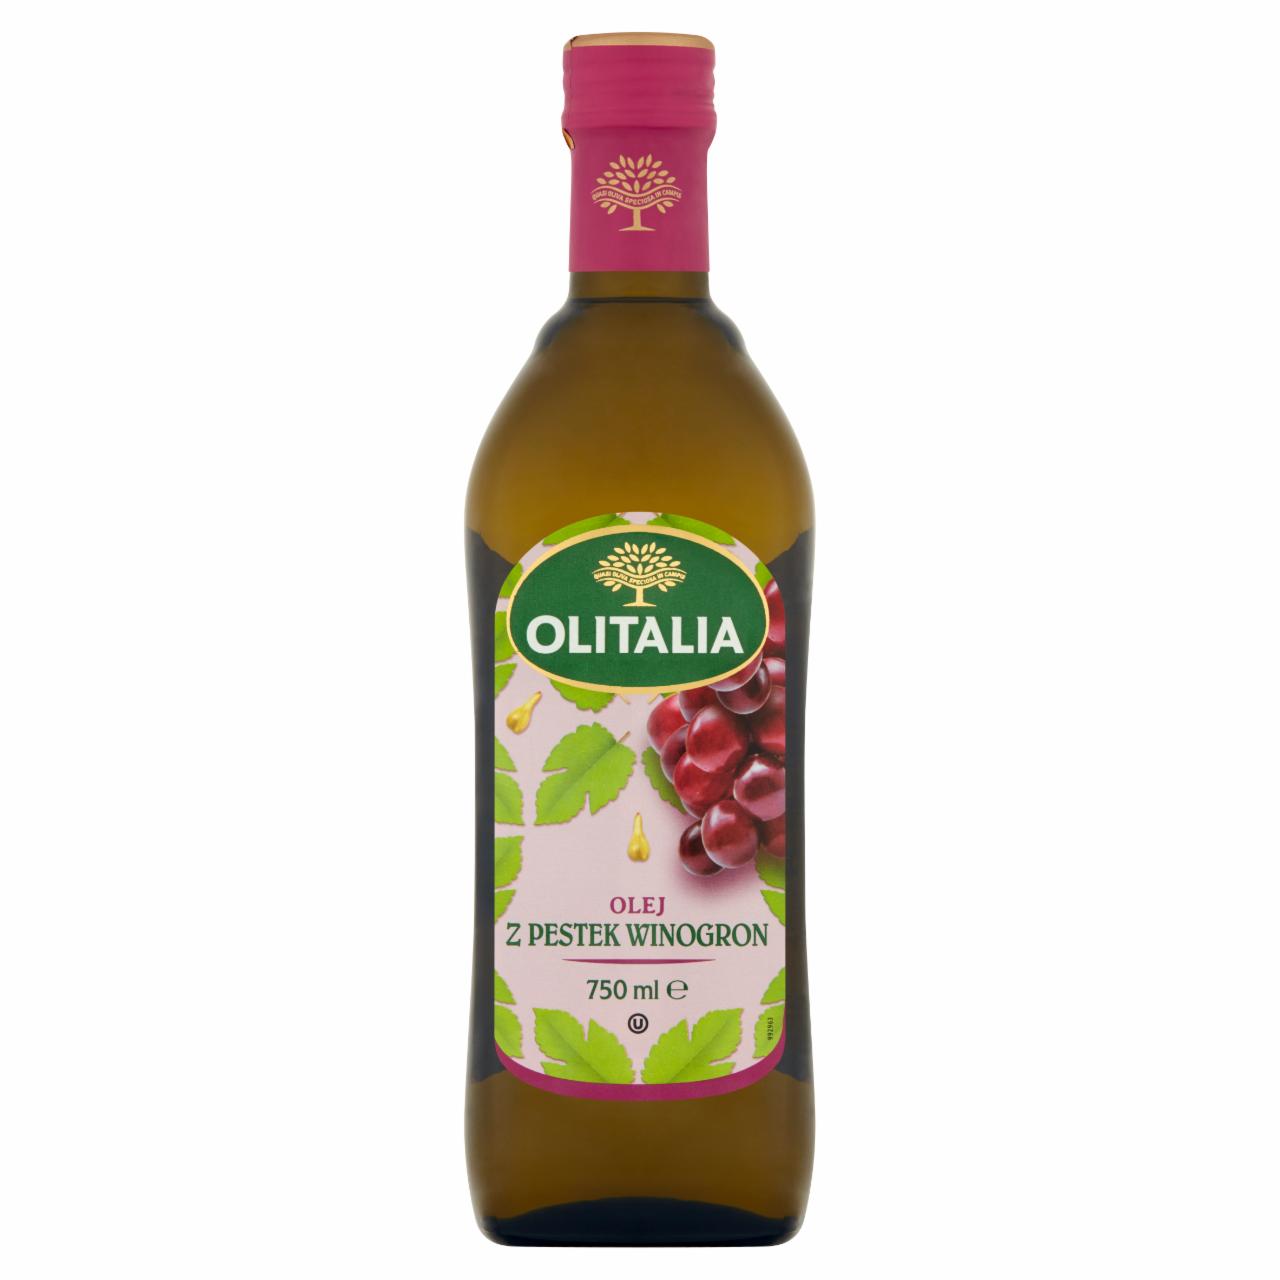 Zdjęcia - Olitalia Olej z pestek winogron 750 ml